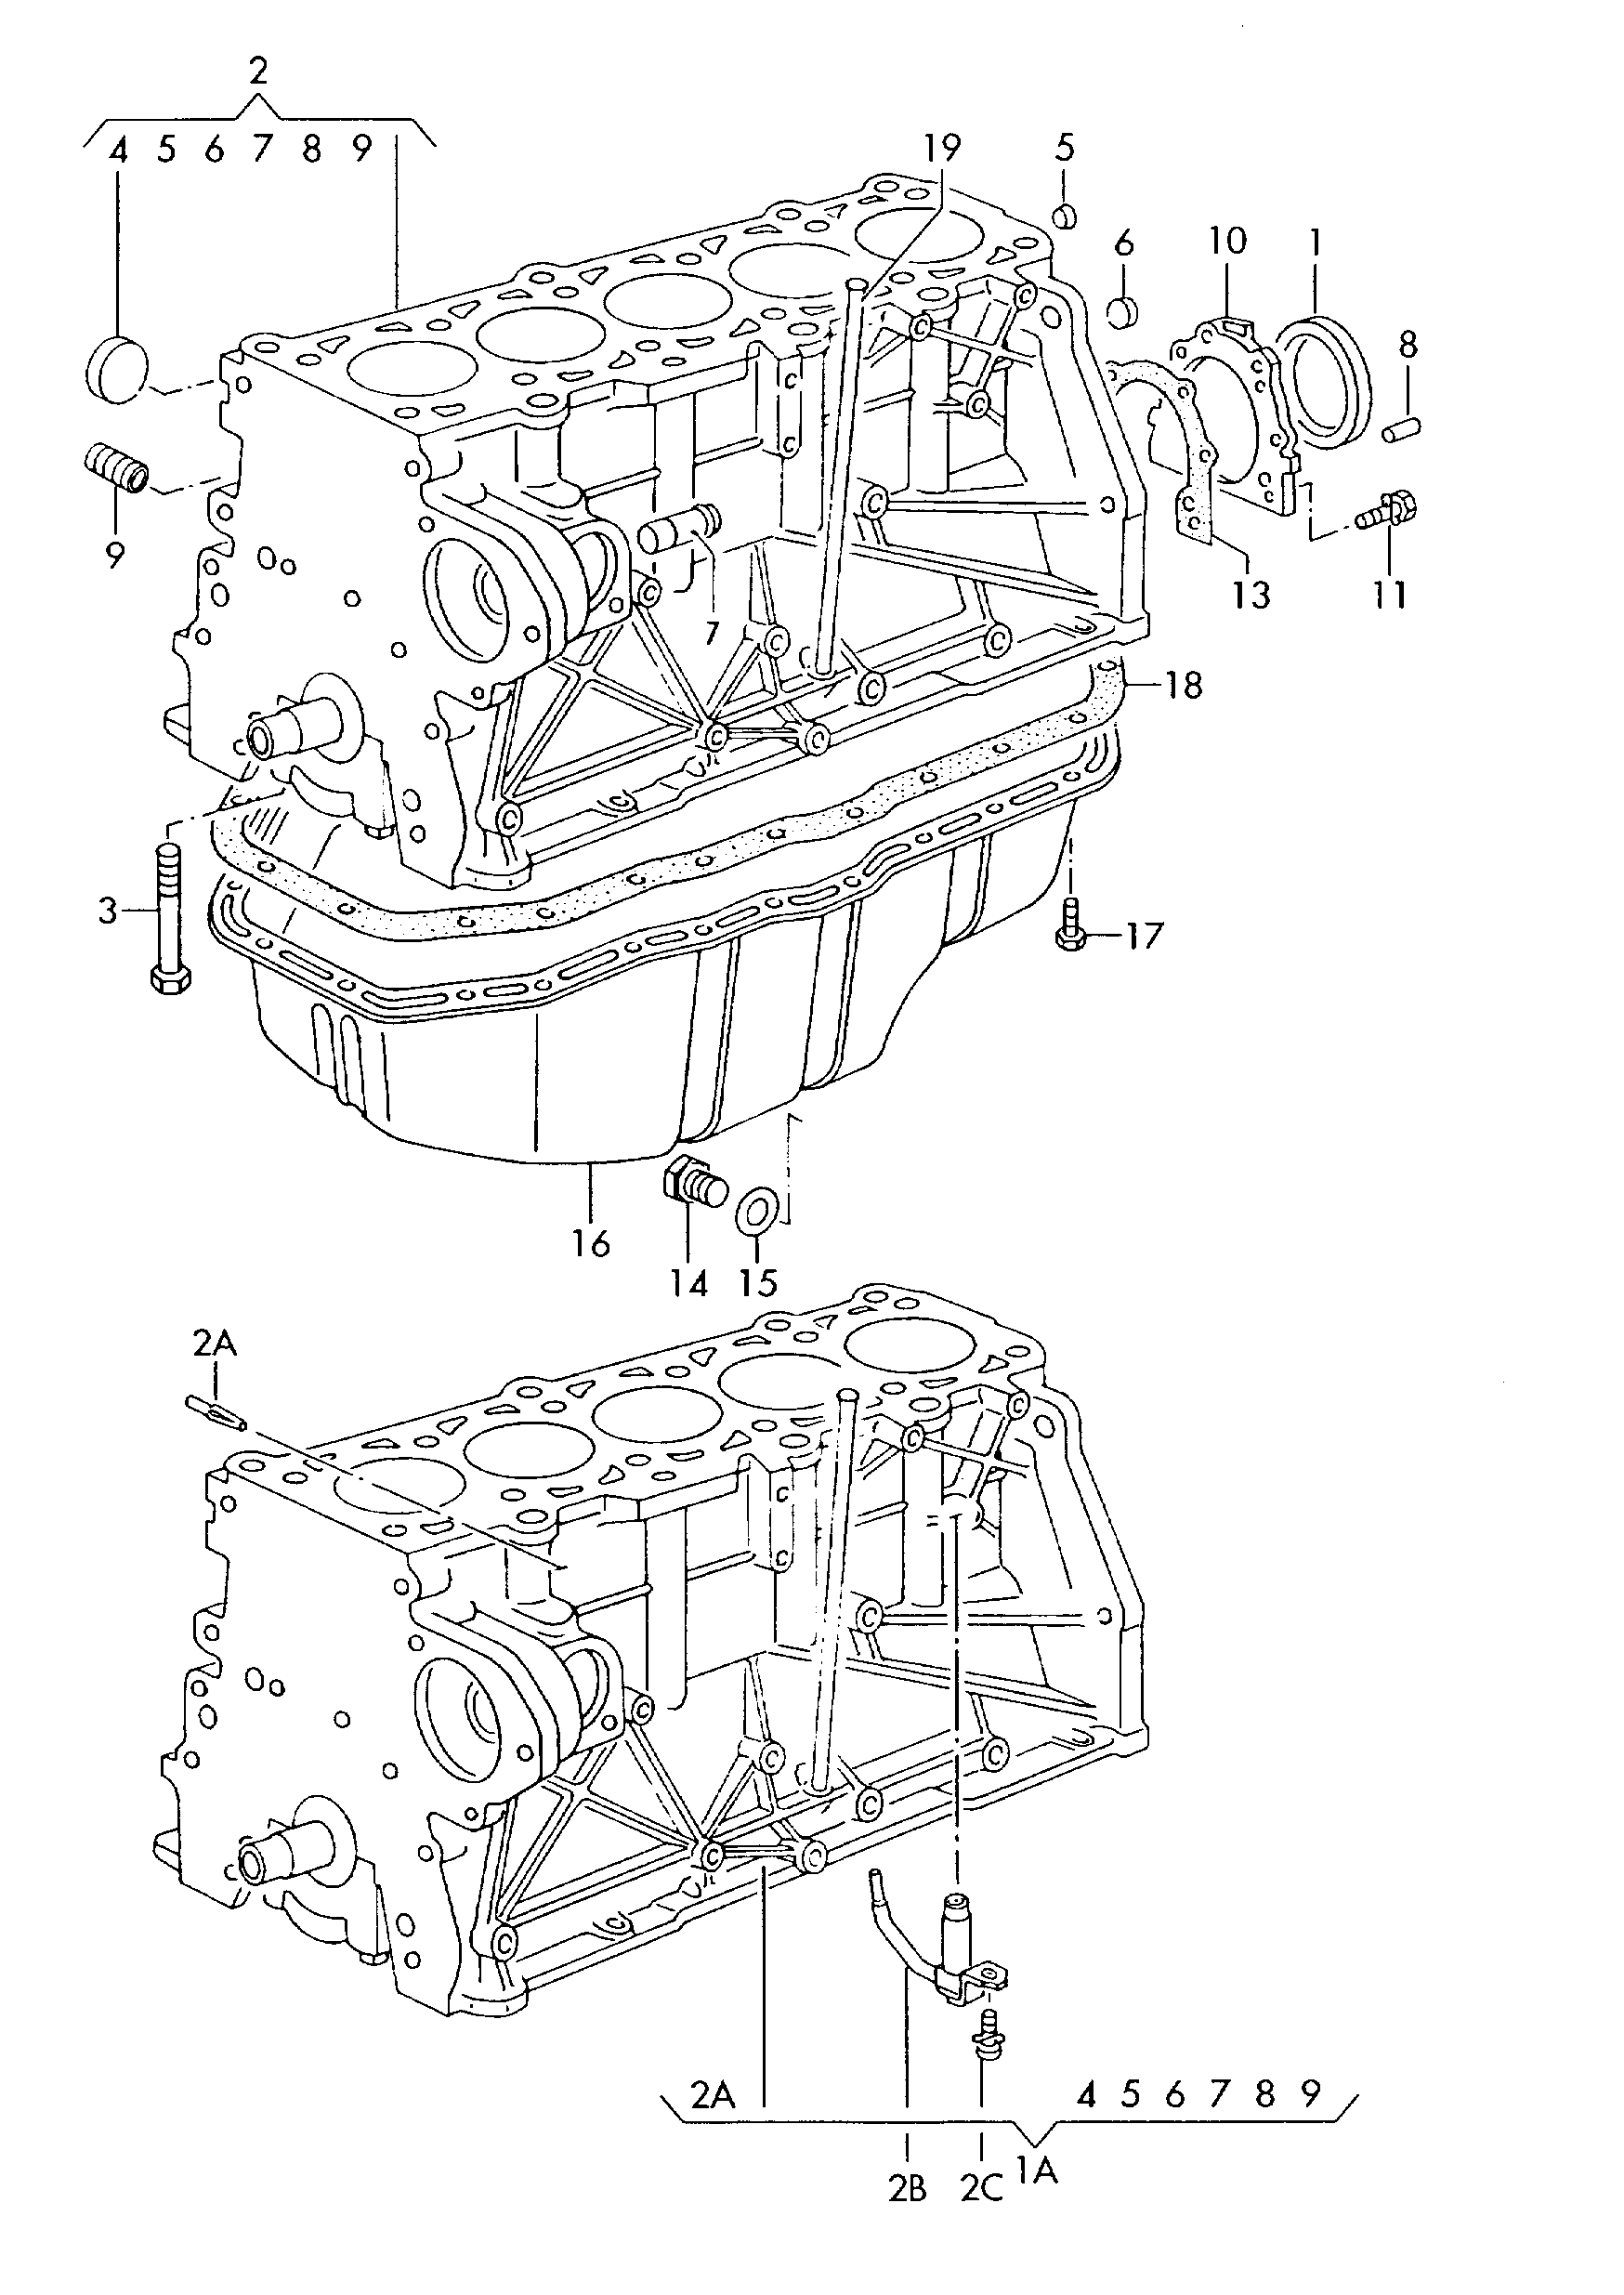 blok silnika z tlokamimiska olejowa 2,0 l - Audi 100/Avant - a100